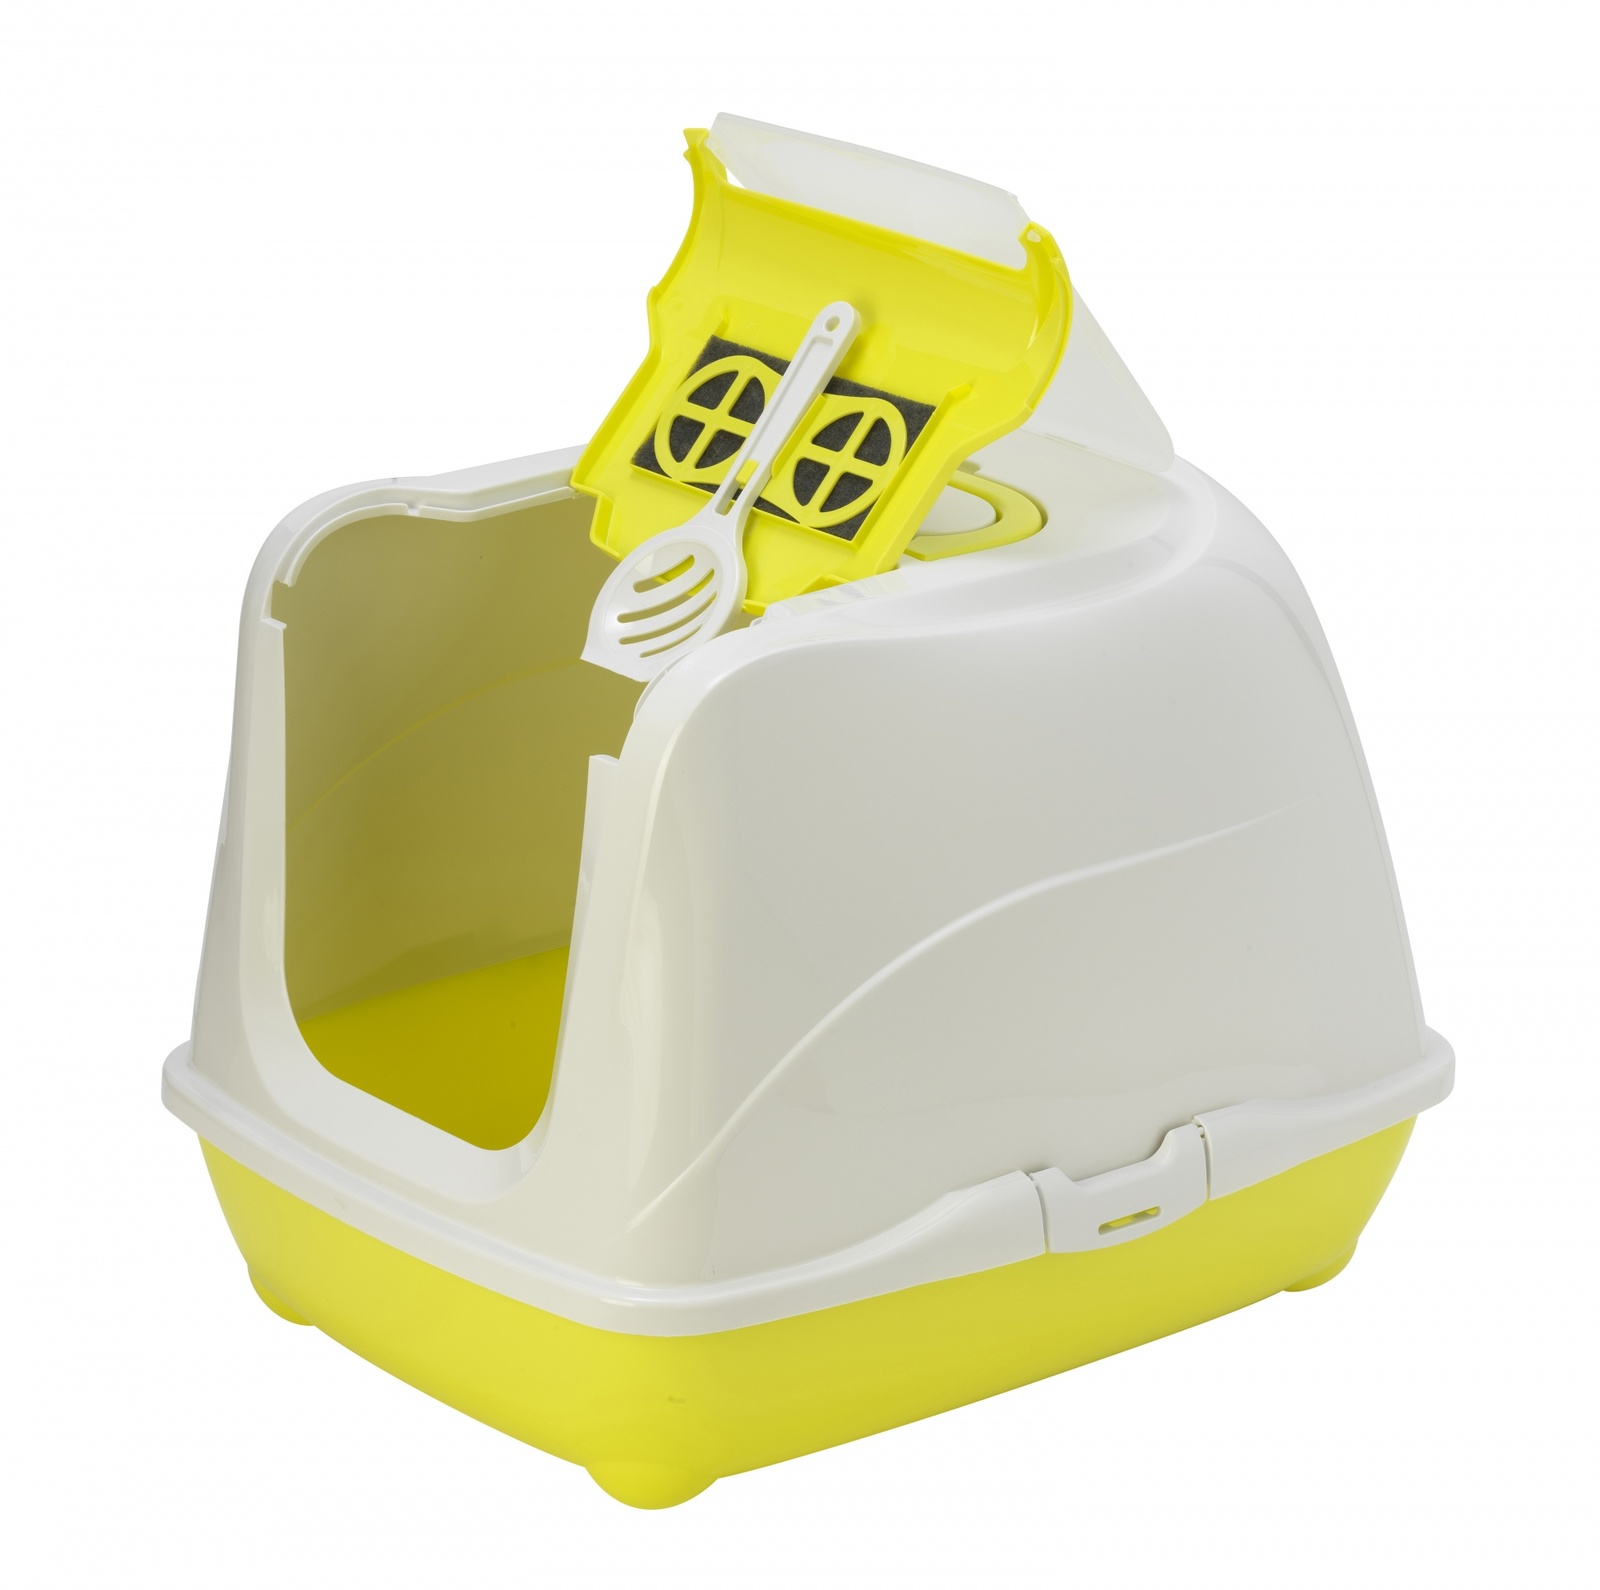 Moderna Moderna туалет-домик Jumbo с угольным фильтром, 57х44х41см, лимонно-желтый (1,7 кг) moderna moderna туалет лоток средний с рамкой 42х30х12см лимонно желтый 400 г